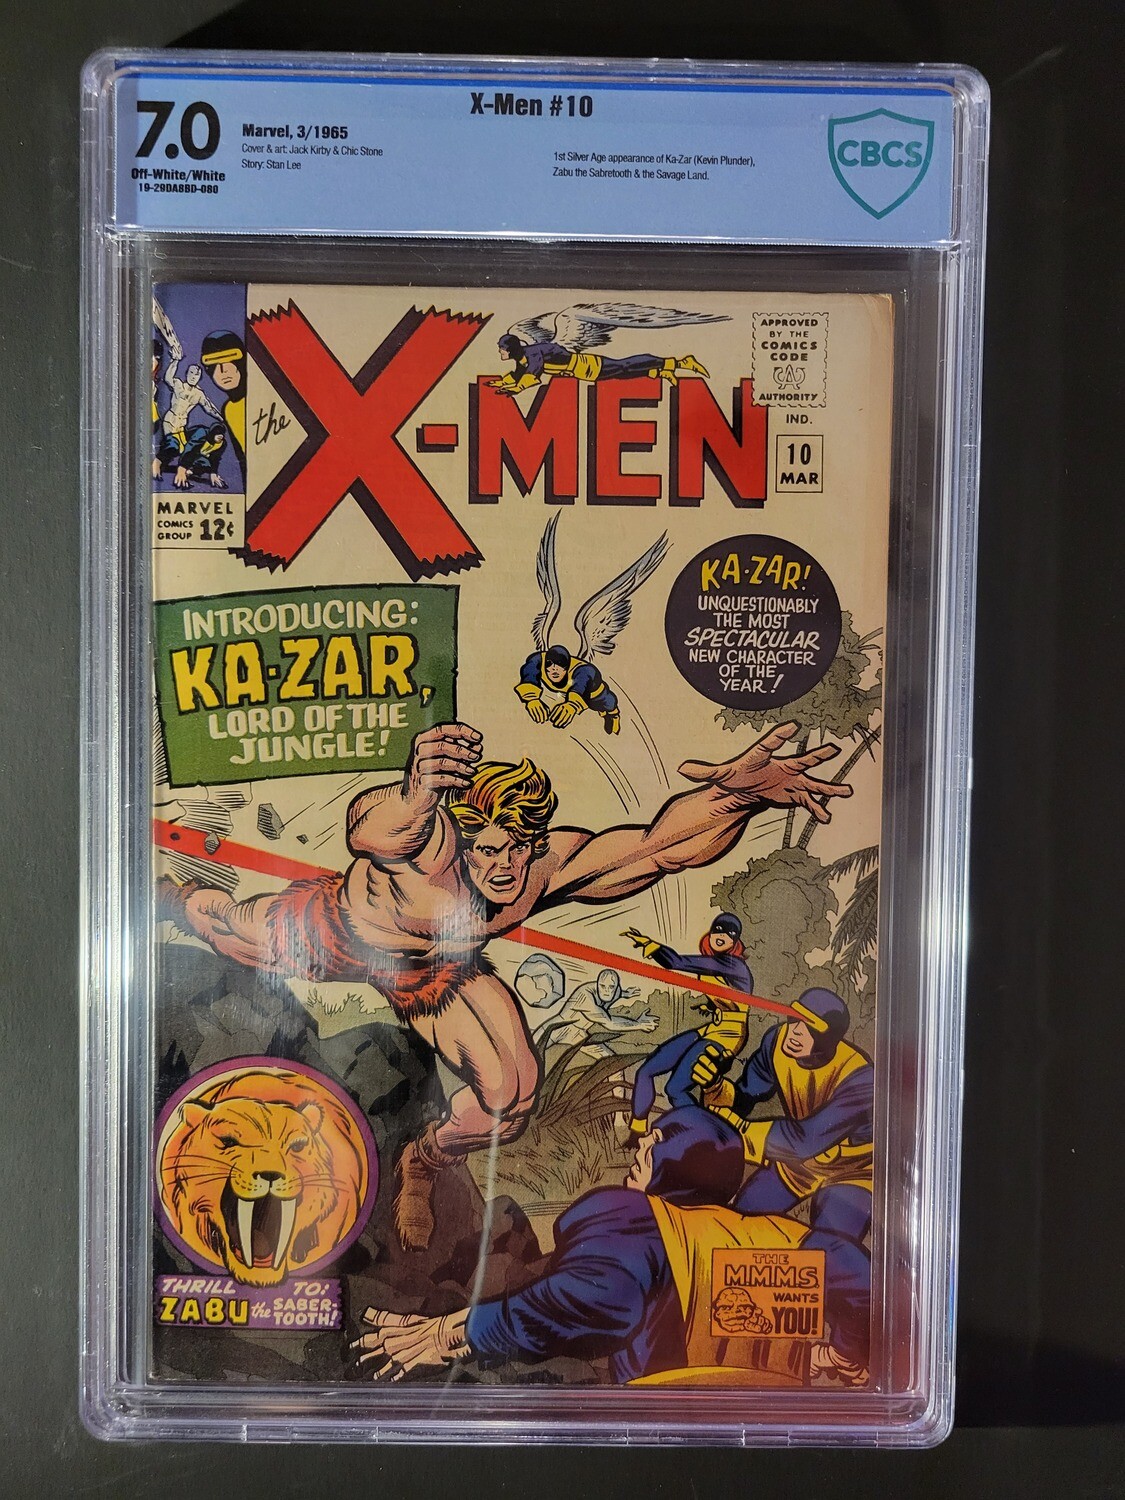 X-Men #11 CBCS 7.0 1st appearance of Silver Age Ka-Zar